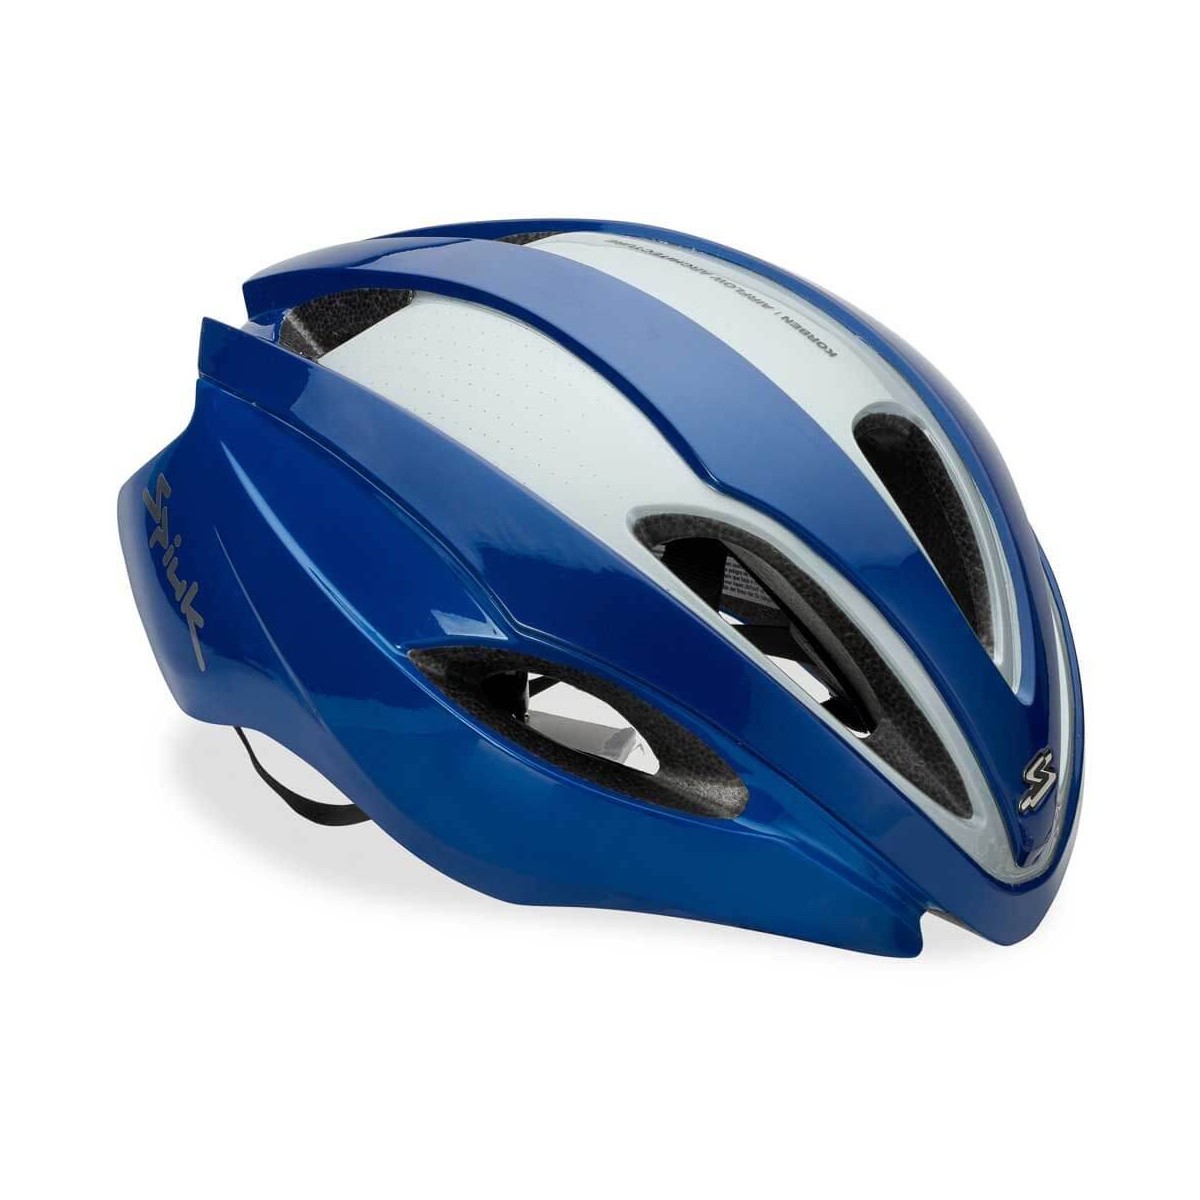 Spiuk Korben Helmet Blue Silver, Size S-M